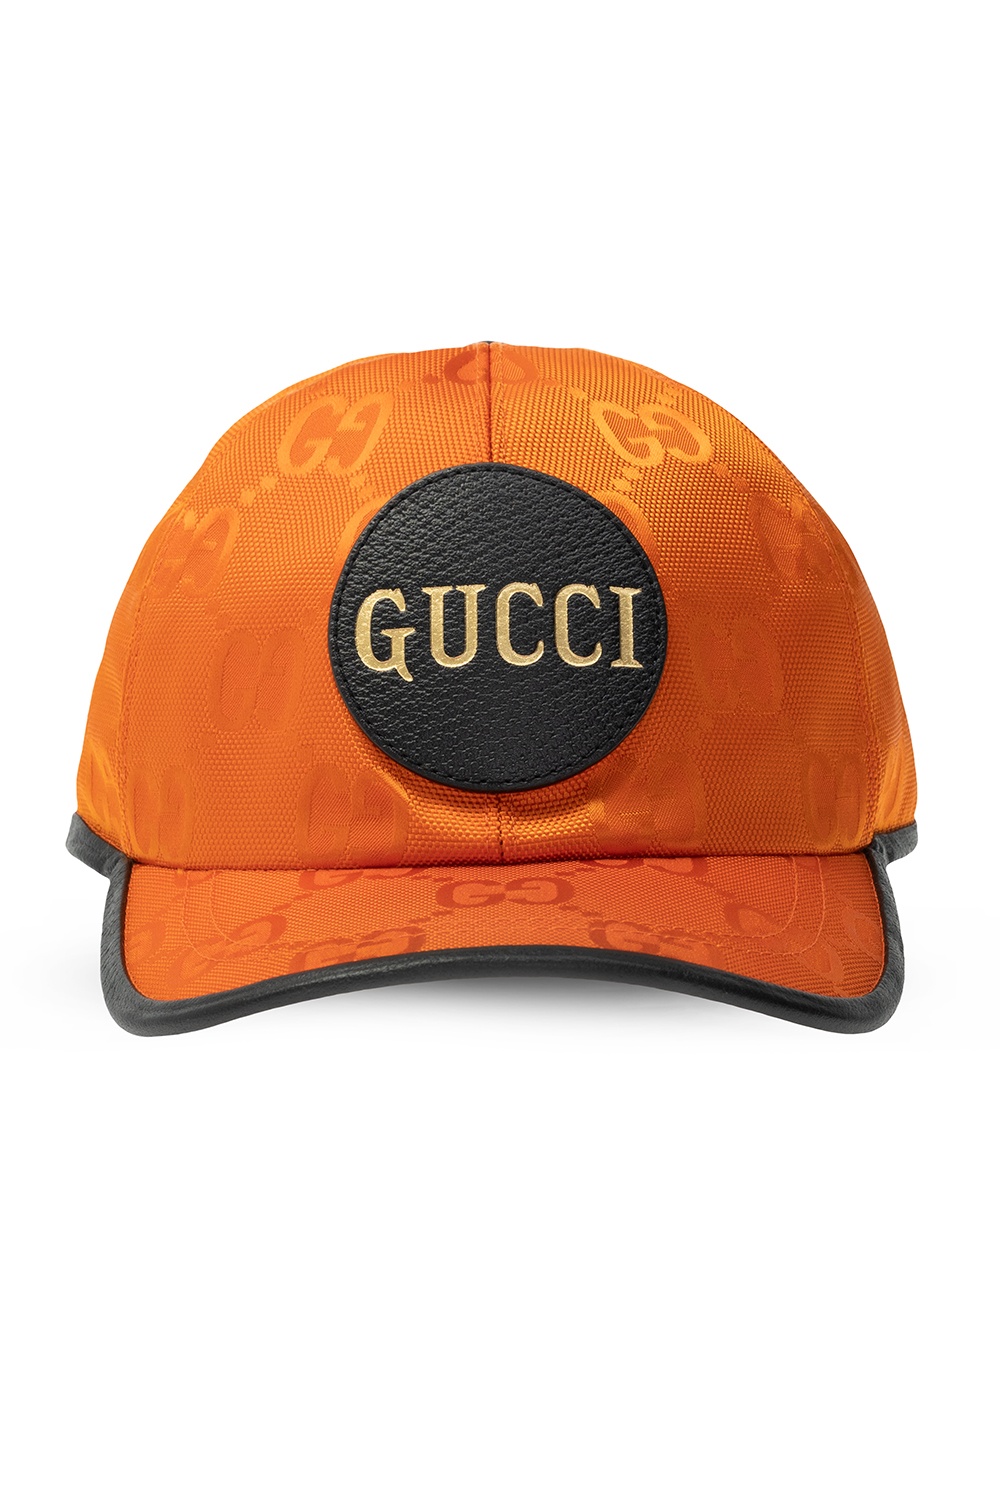 Gucci Black Gg Embroidered Baseball Cap